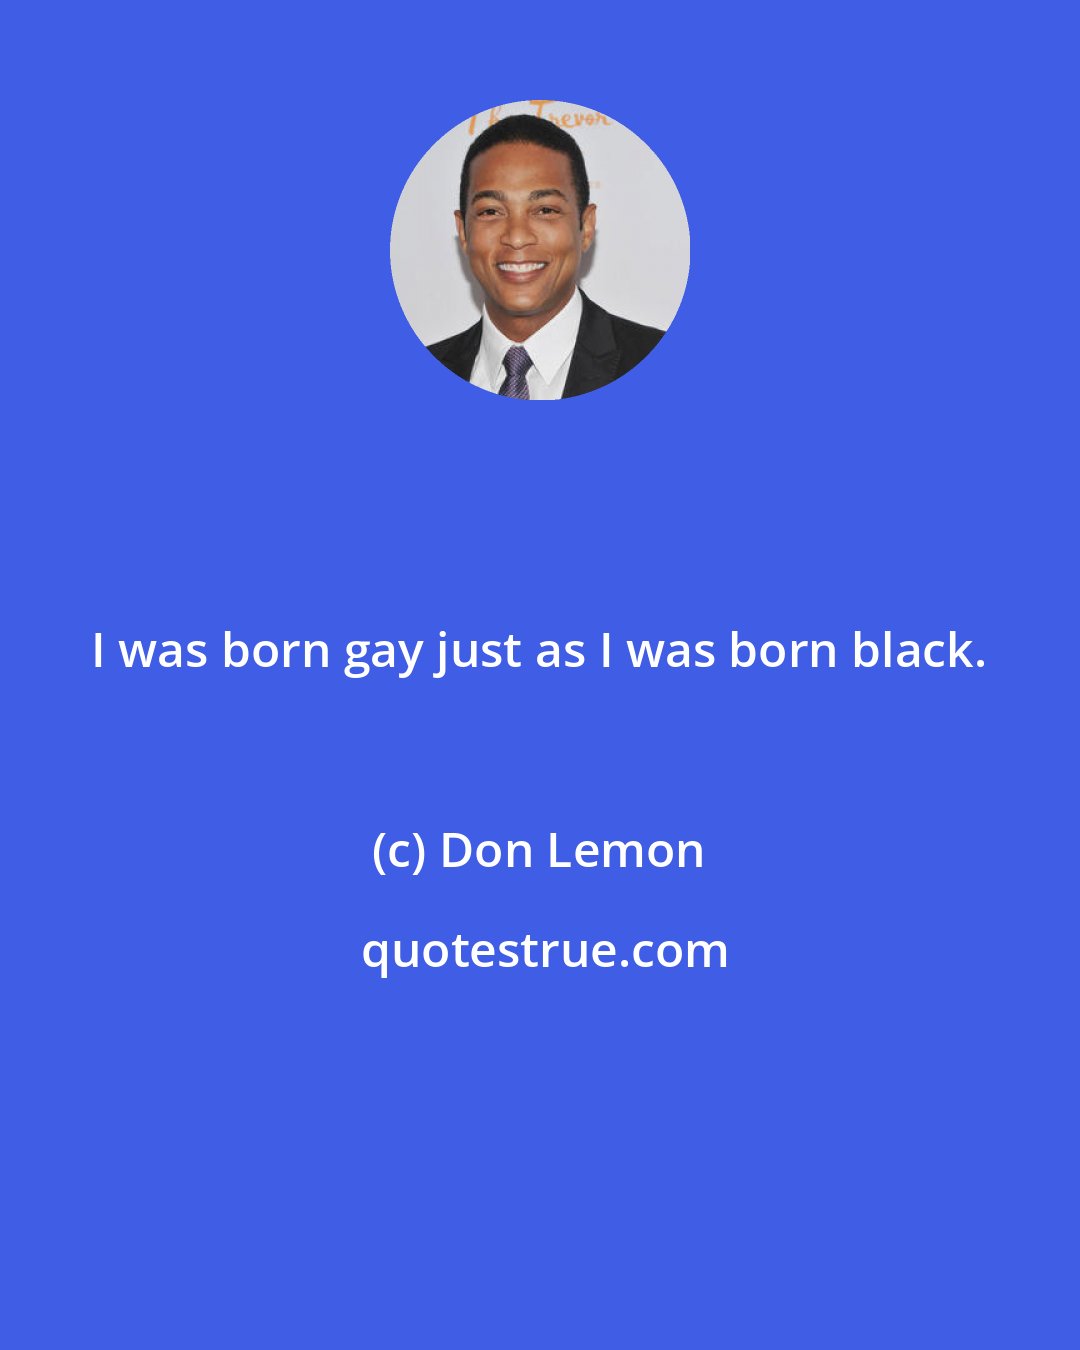 Don Lemon: I was born gay just as I was born black.